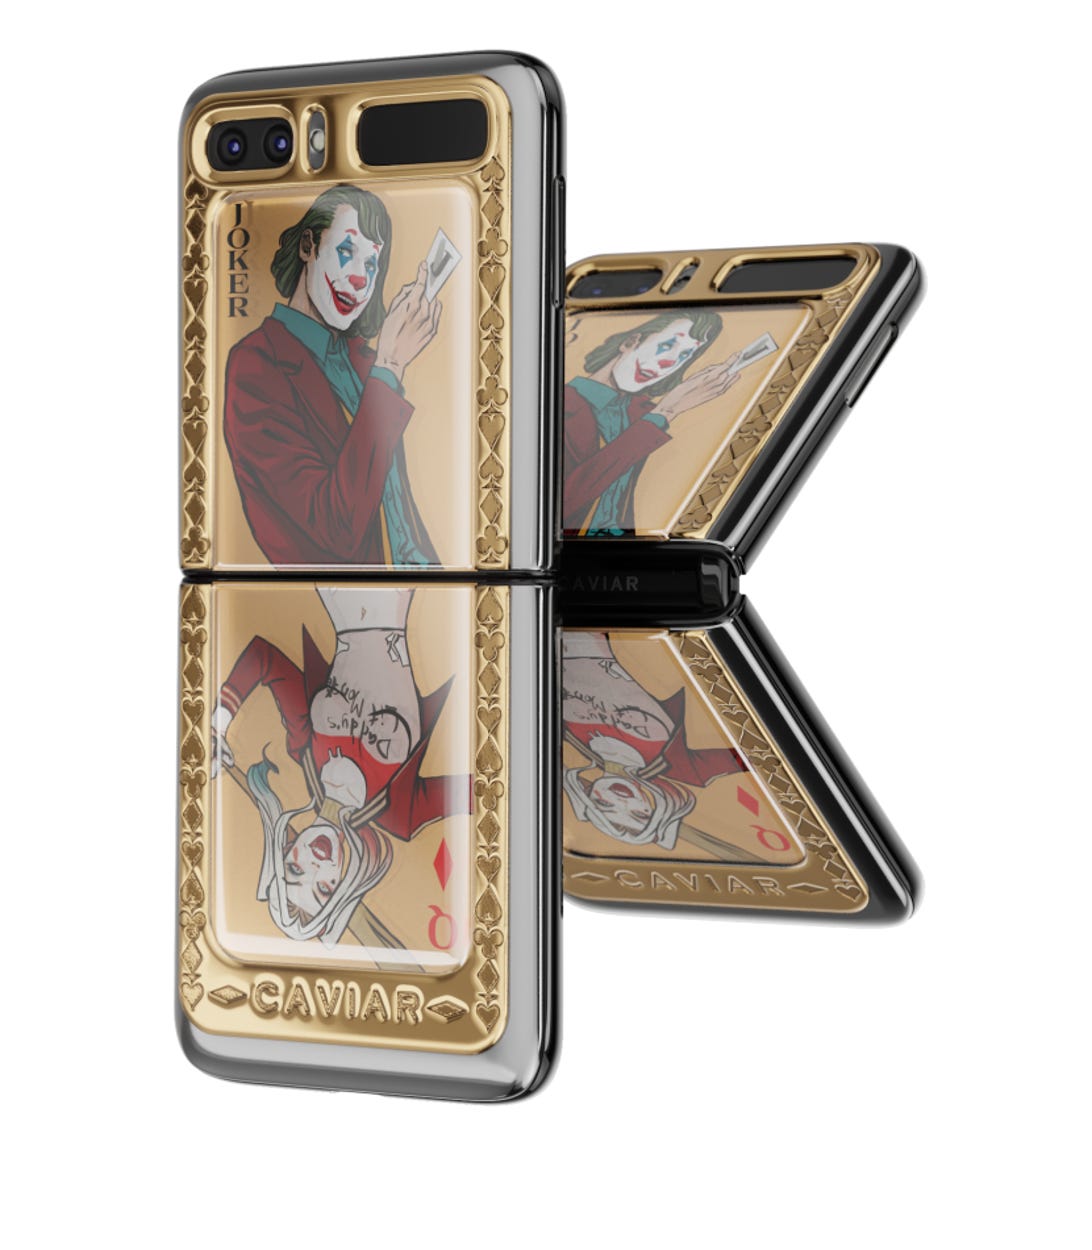 This K foldable phone stars the Joker and Harley Quinn